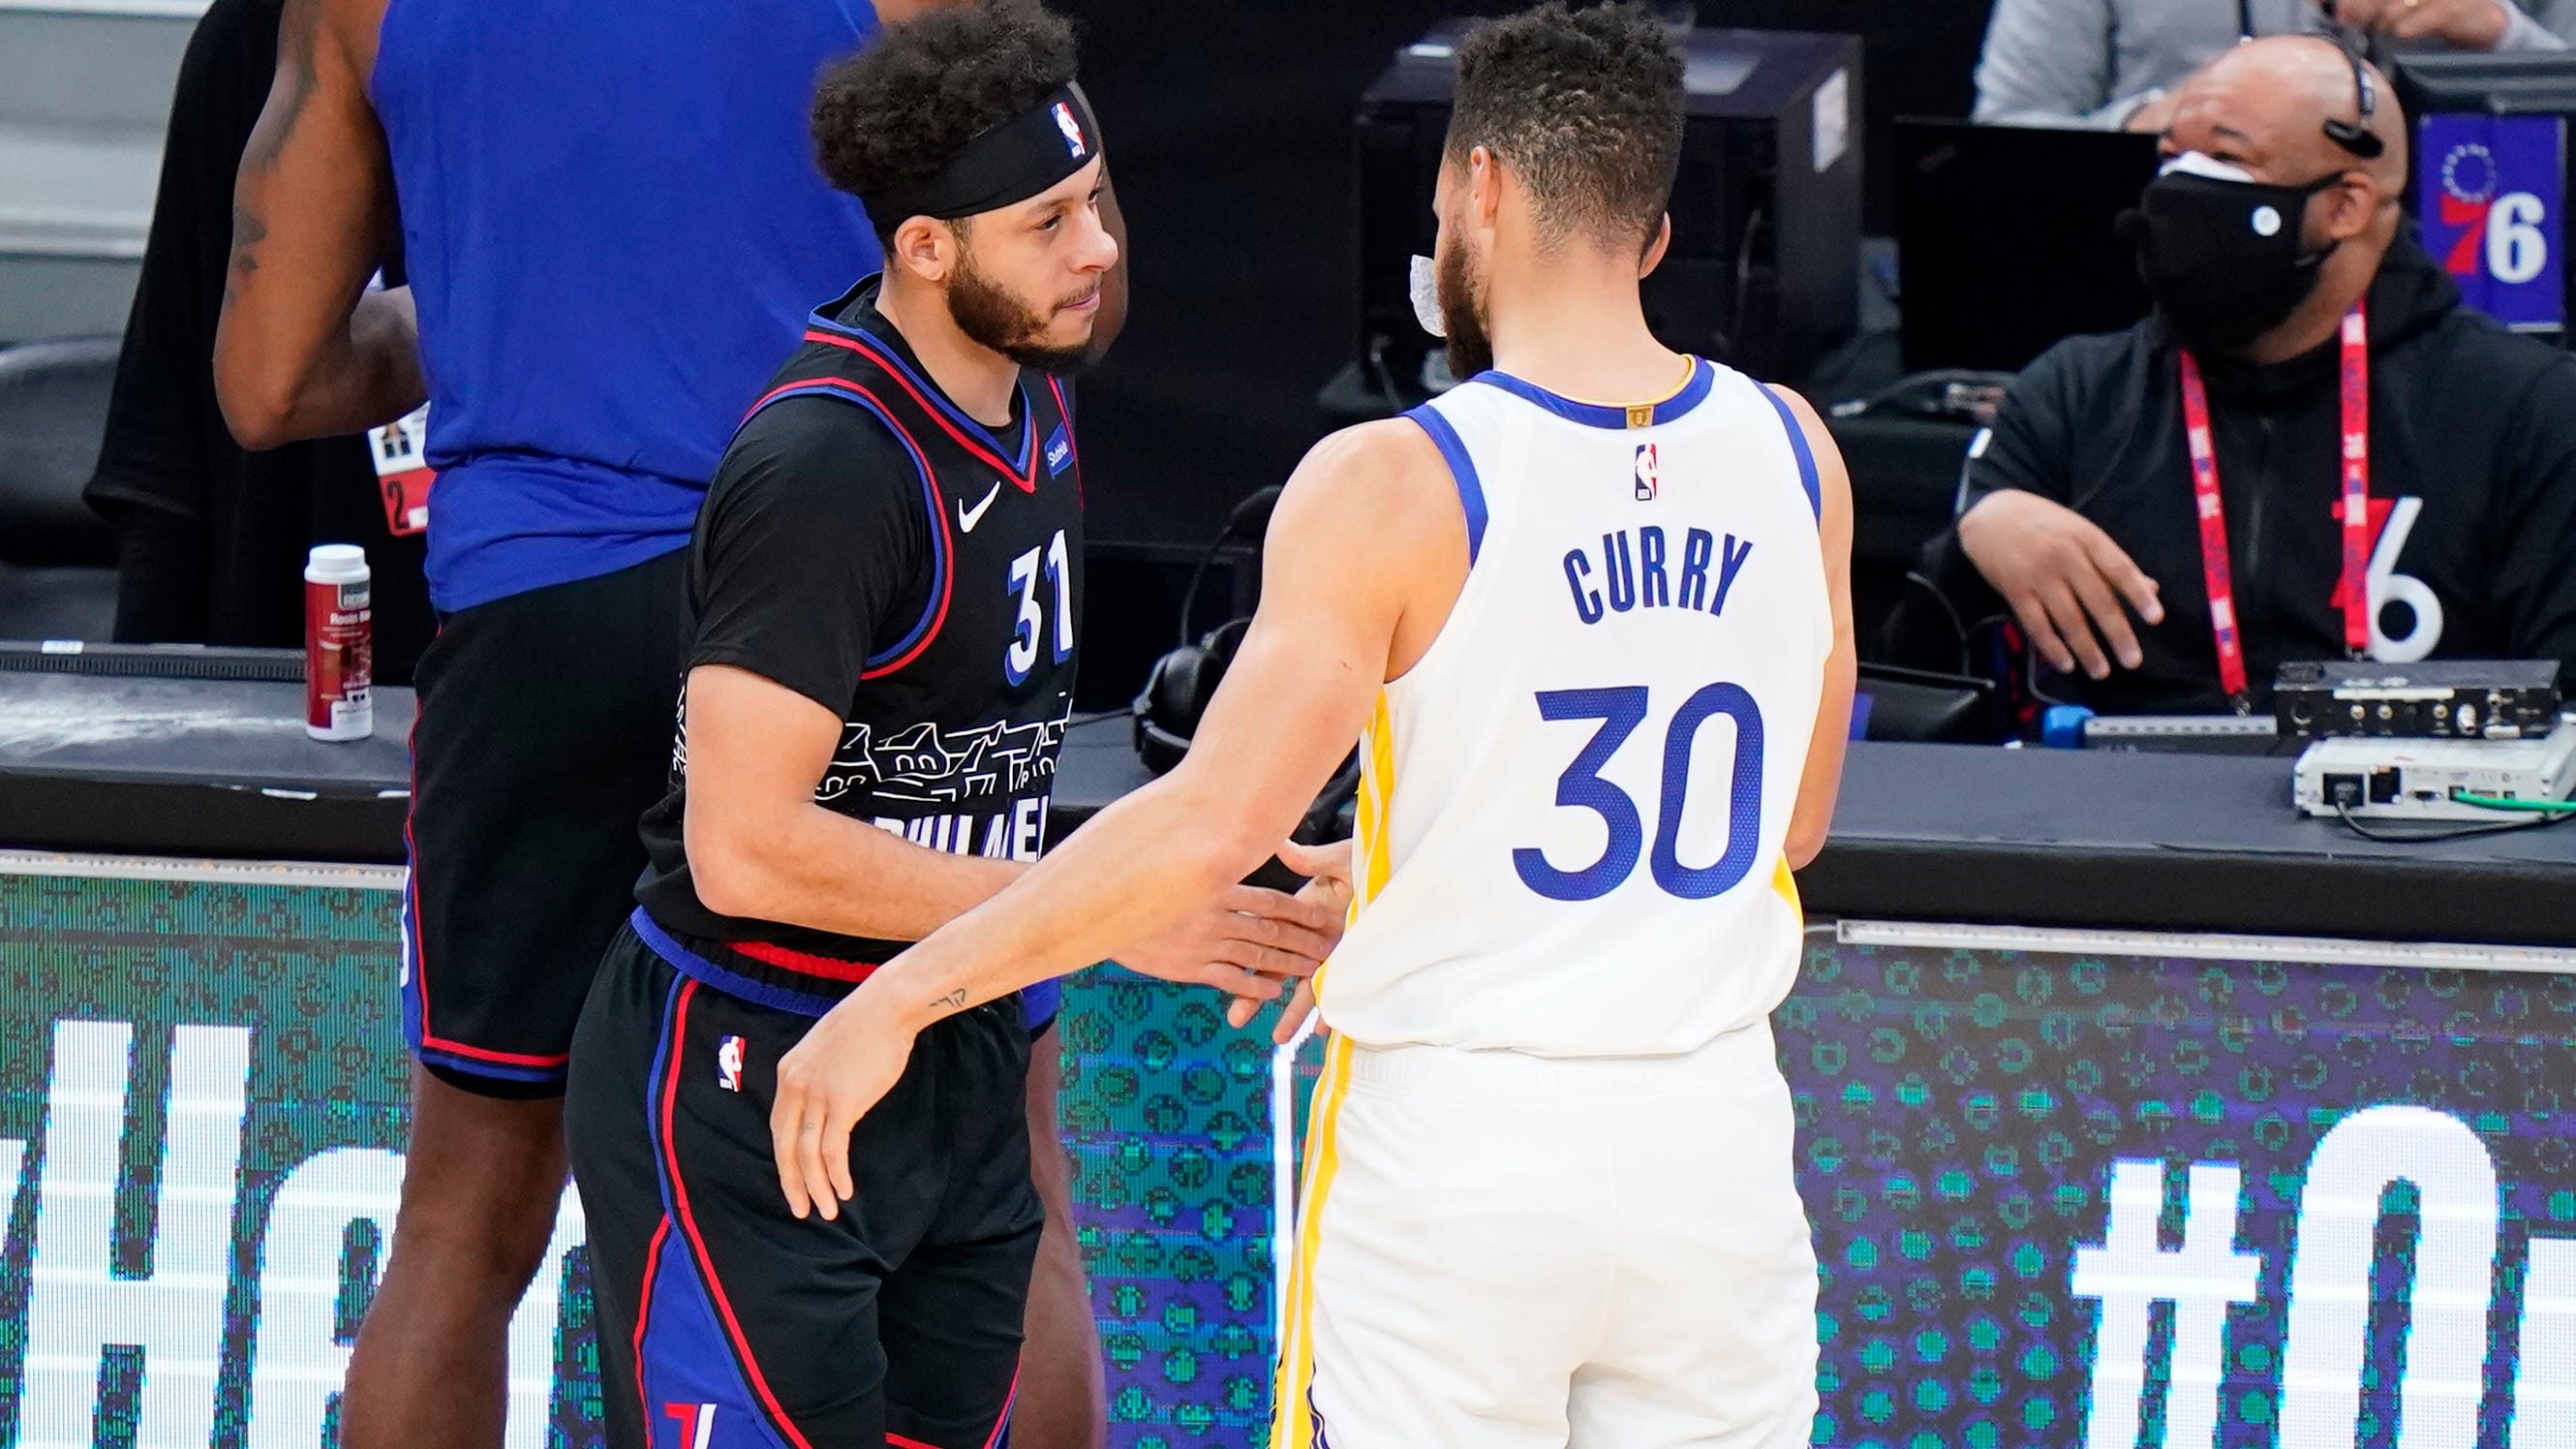 Philadelphia 76ers' Seth Curry, left, and Golden State Warriors' Stephen Curry meet before an NBA basketball game, Monday, April 19, 2021, in Philadelphia. (AP Photo/Matt Slocum)